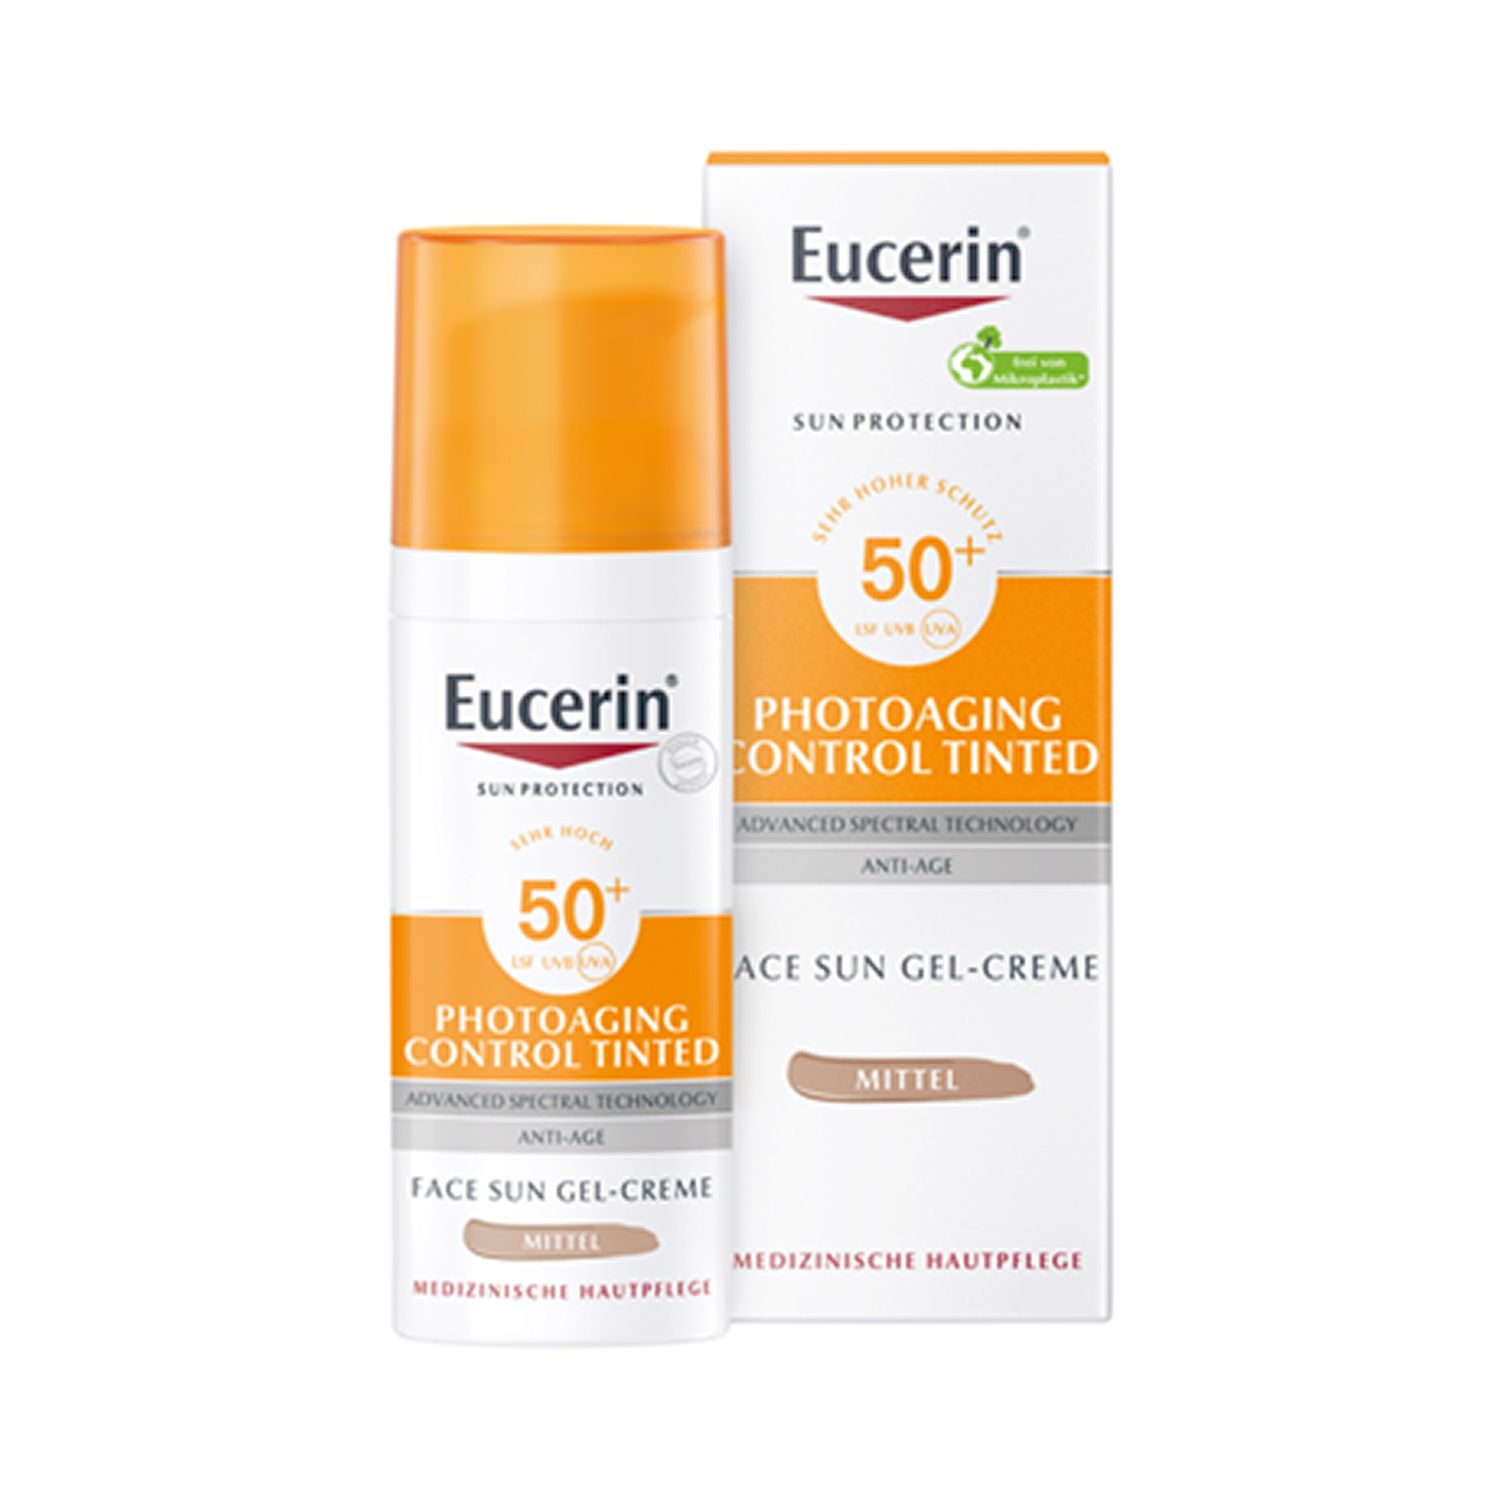 Eucerin® Photoaging Control Tinted Face Sun Gel-Creme LSF 50+ Mittel + Eucerin Oil Control Body LSF50+ 50ml GRATIS